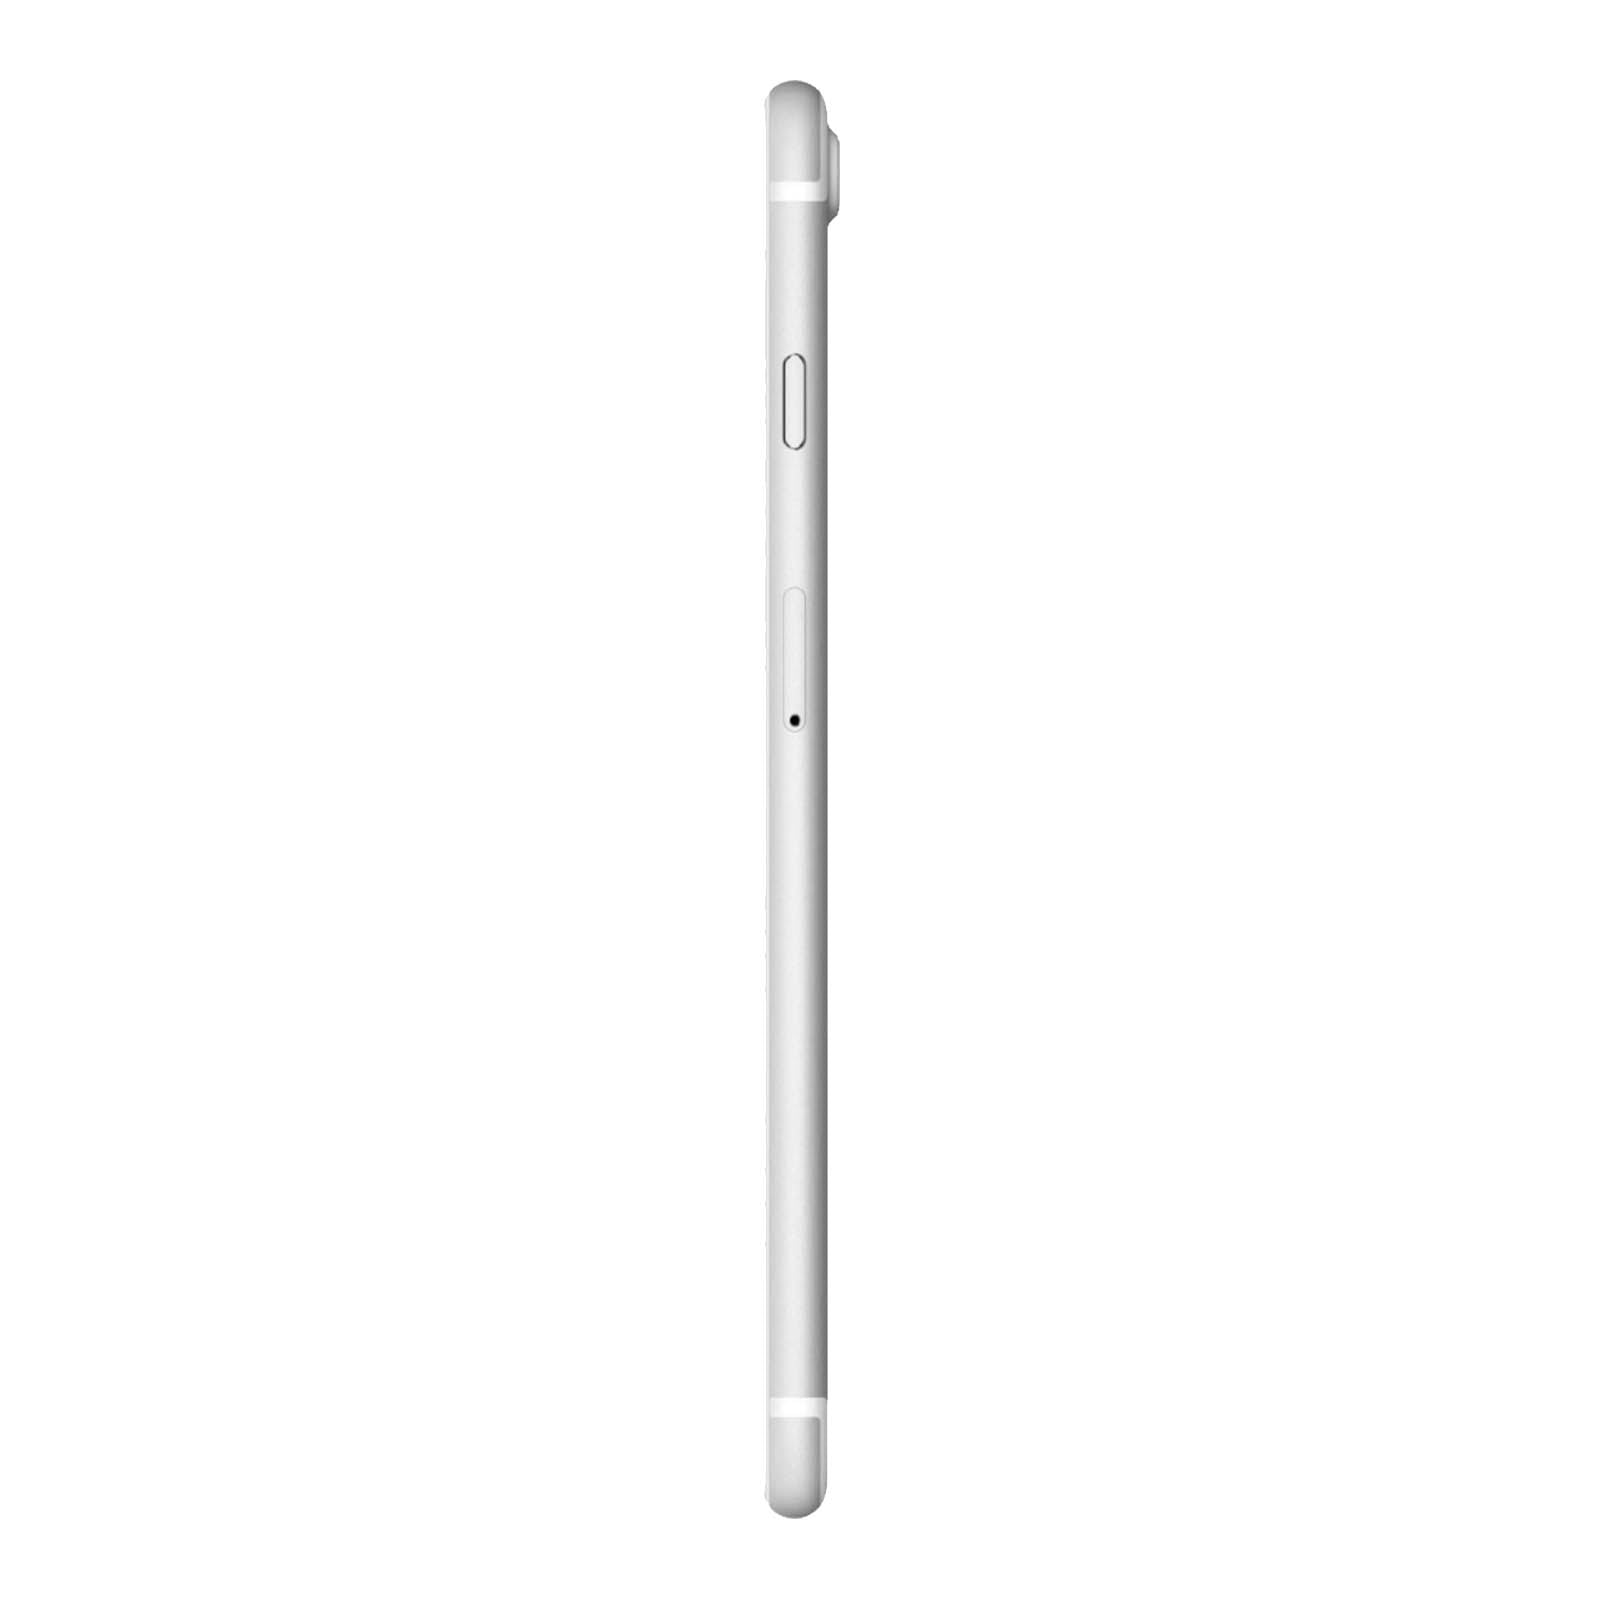 Apple iPhone 7 Plus 256GB Silber Sehr Gut - Ohne Vertrag